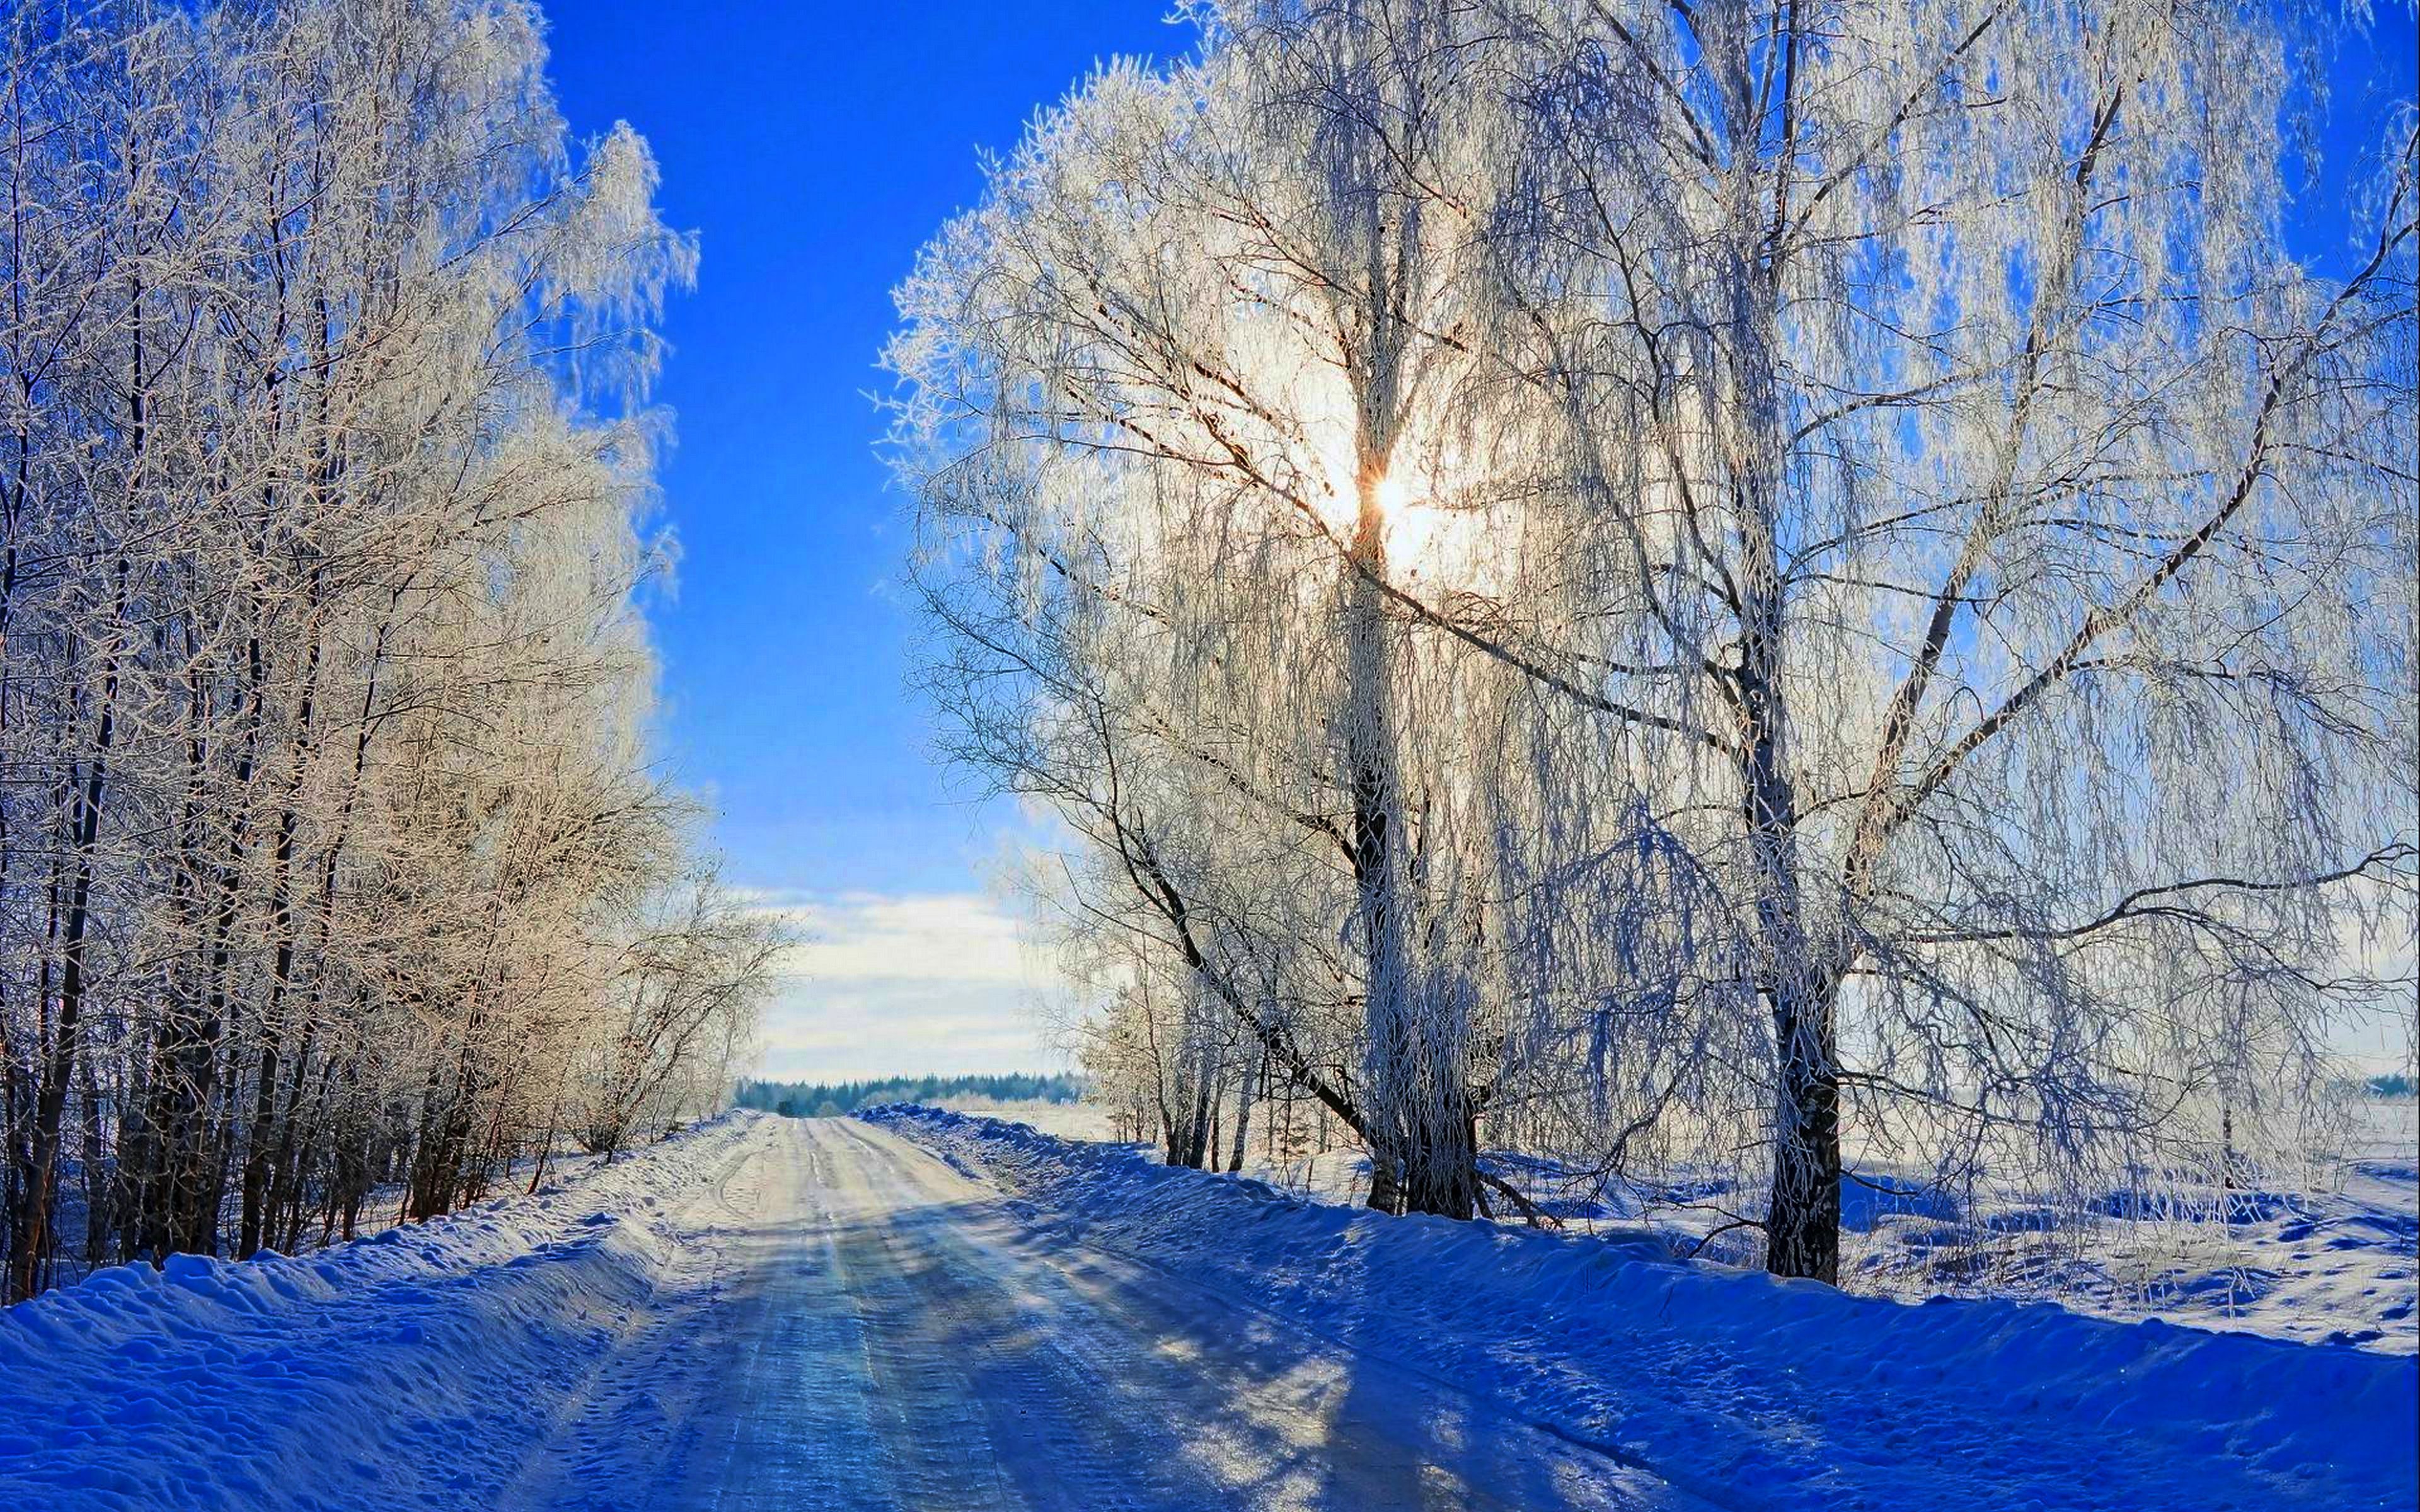 Snowy - Landscape - Зима Обой На Рабочий Стол Высокого Качества , HD Wallpaper & Backgrounds